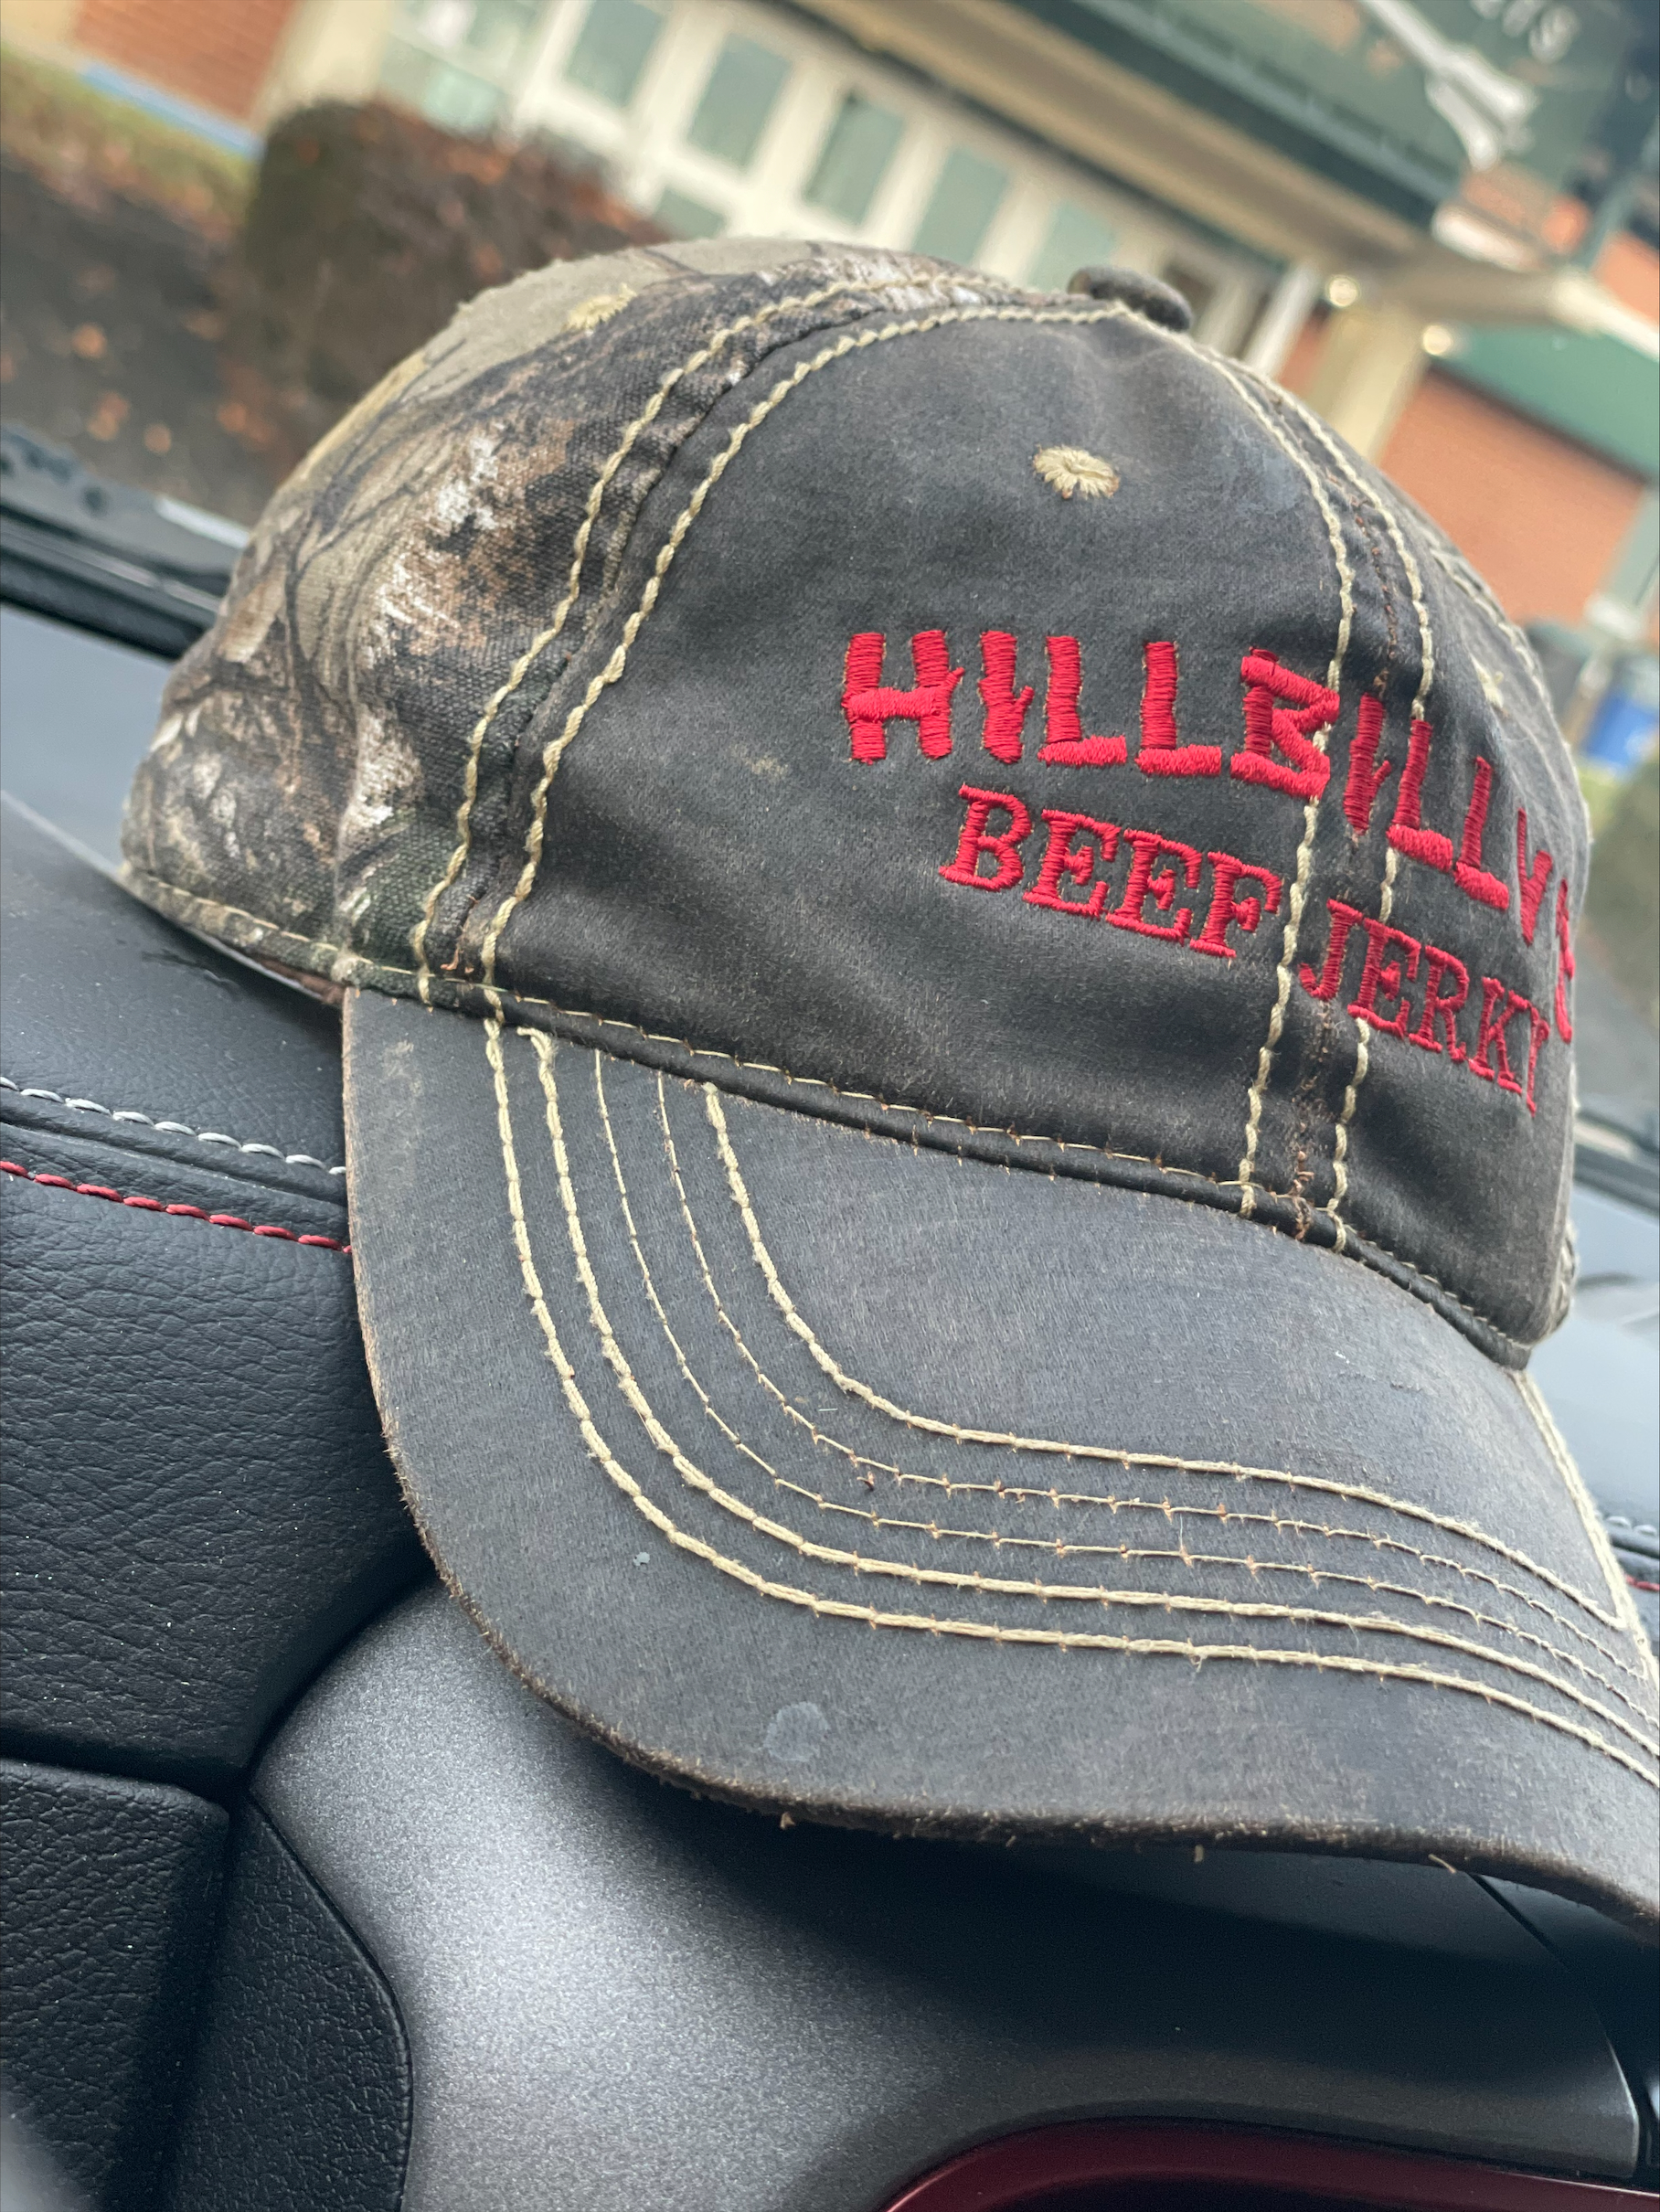 Hillbilly Jerky hat